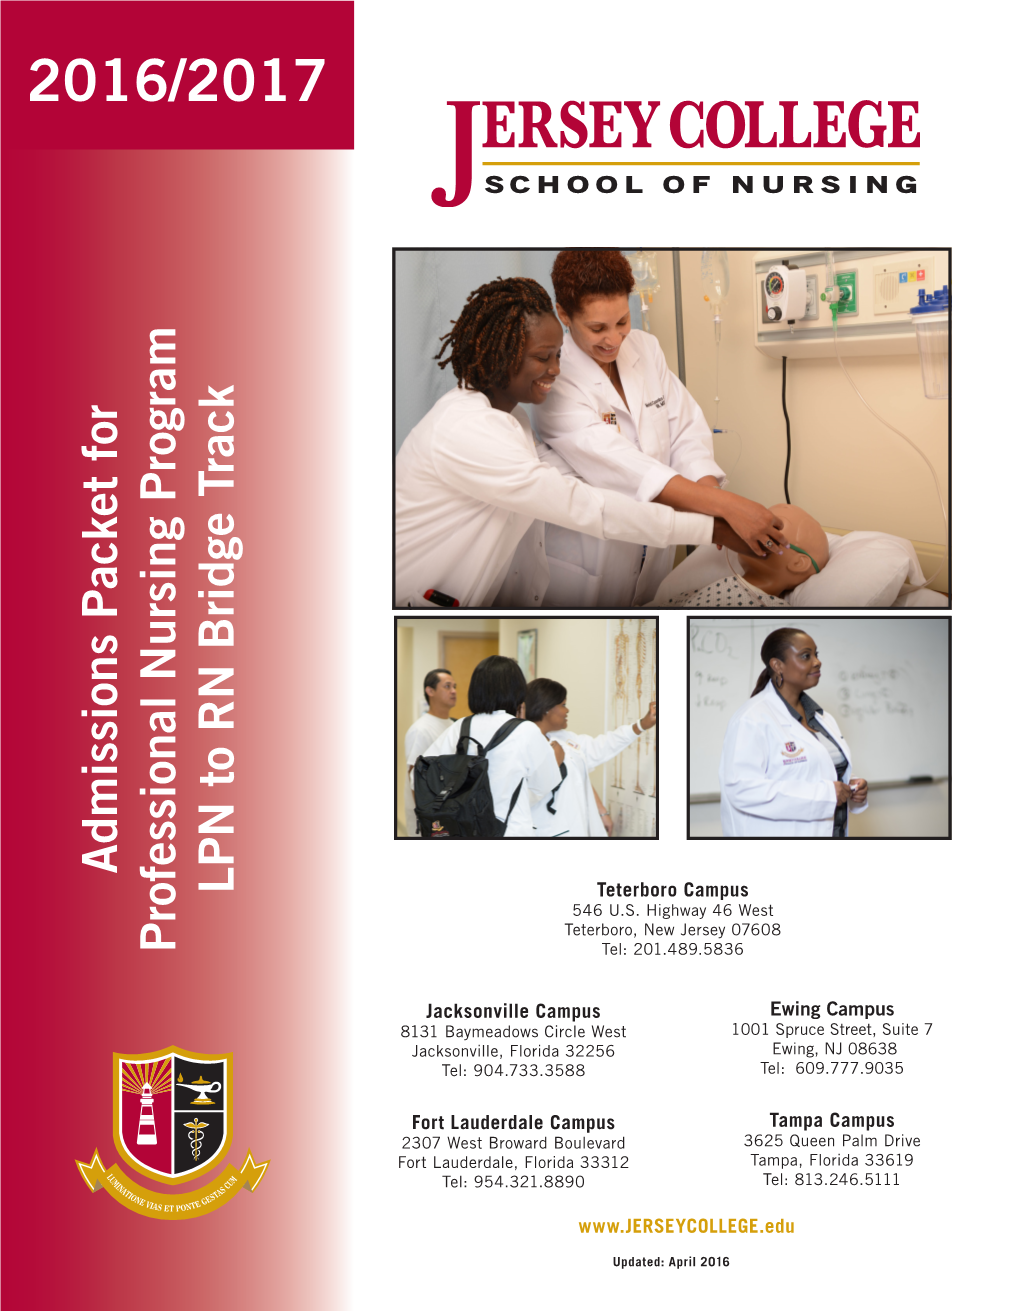 Admissions Packet for Professional Nursing Program